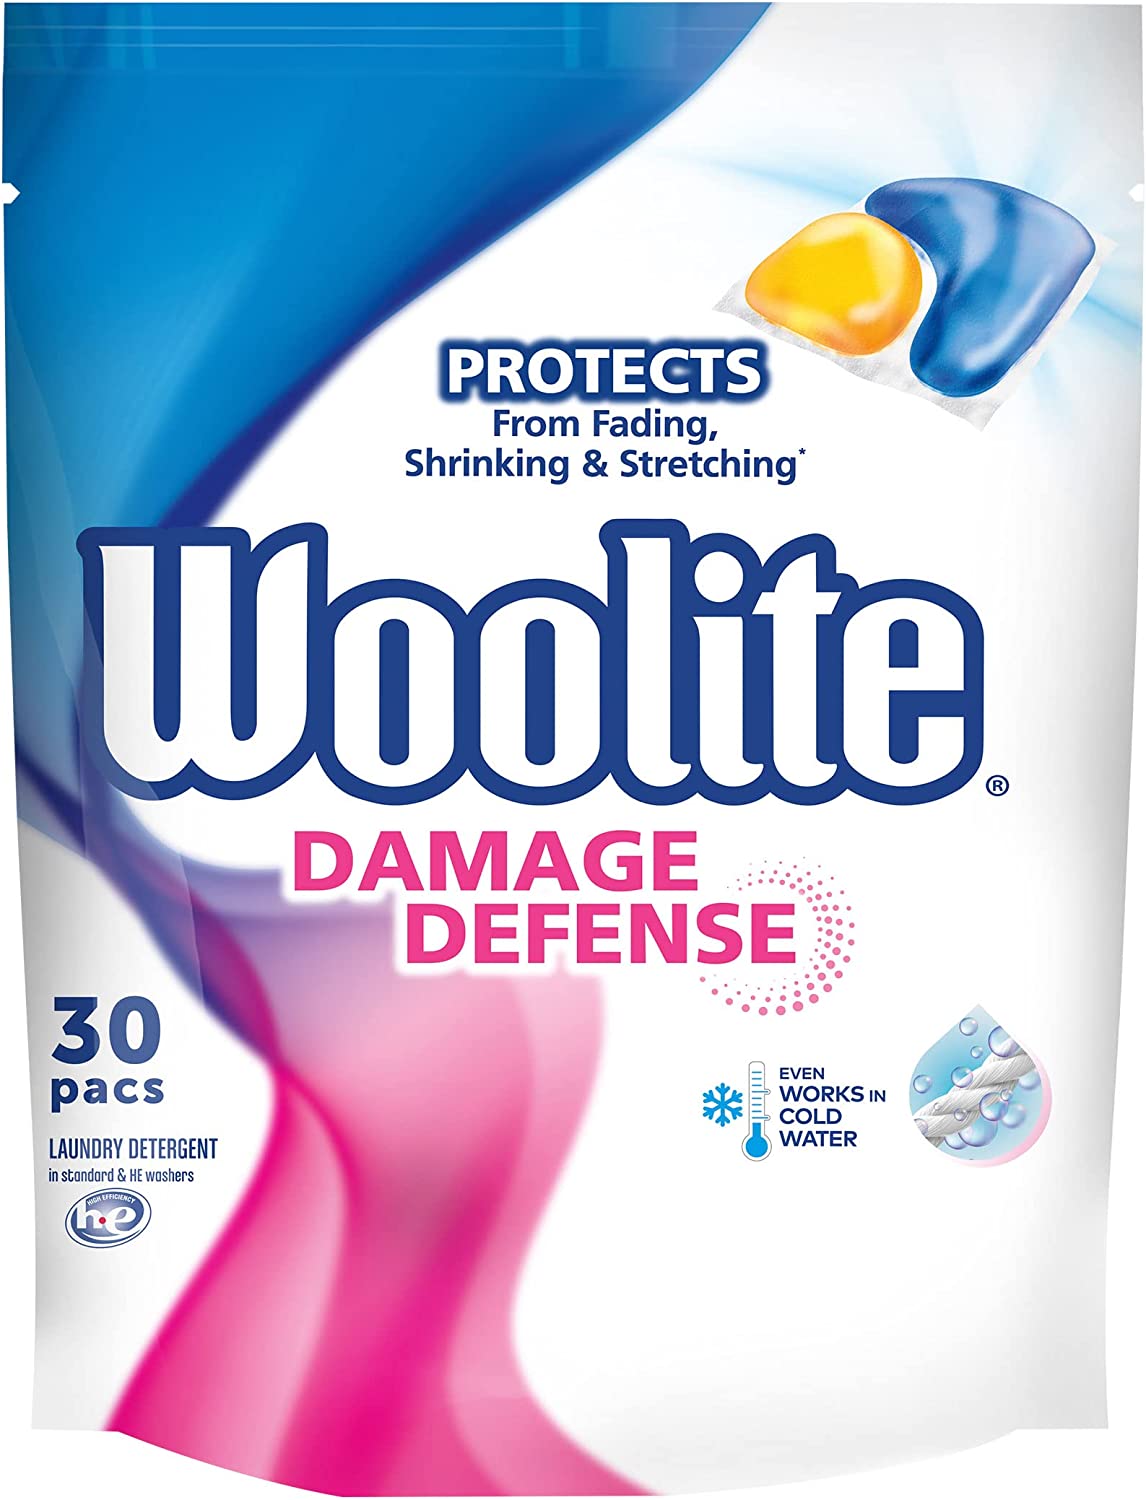 Woolite Regular & High-Efficiency Laundry Detergent Travel Packs, 30-Count